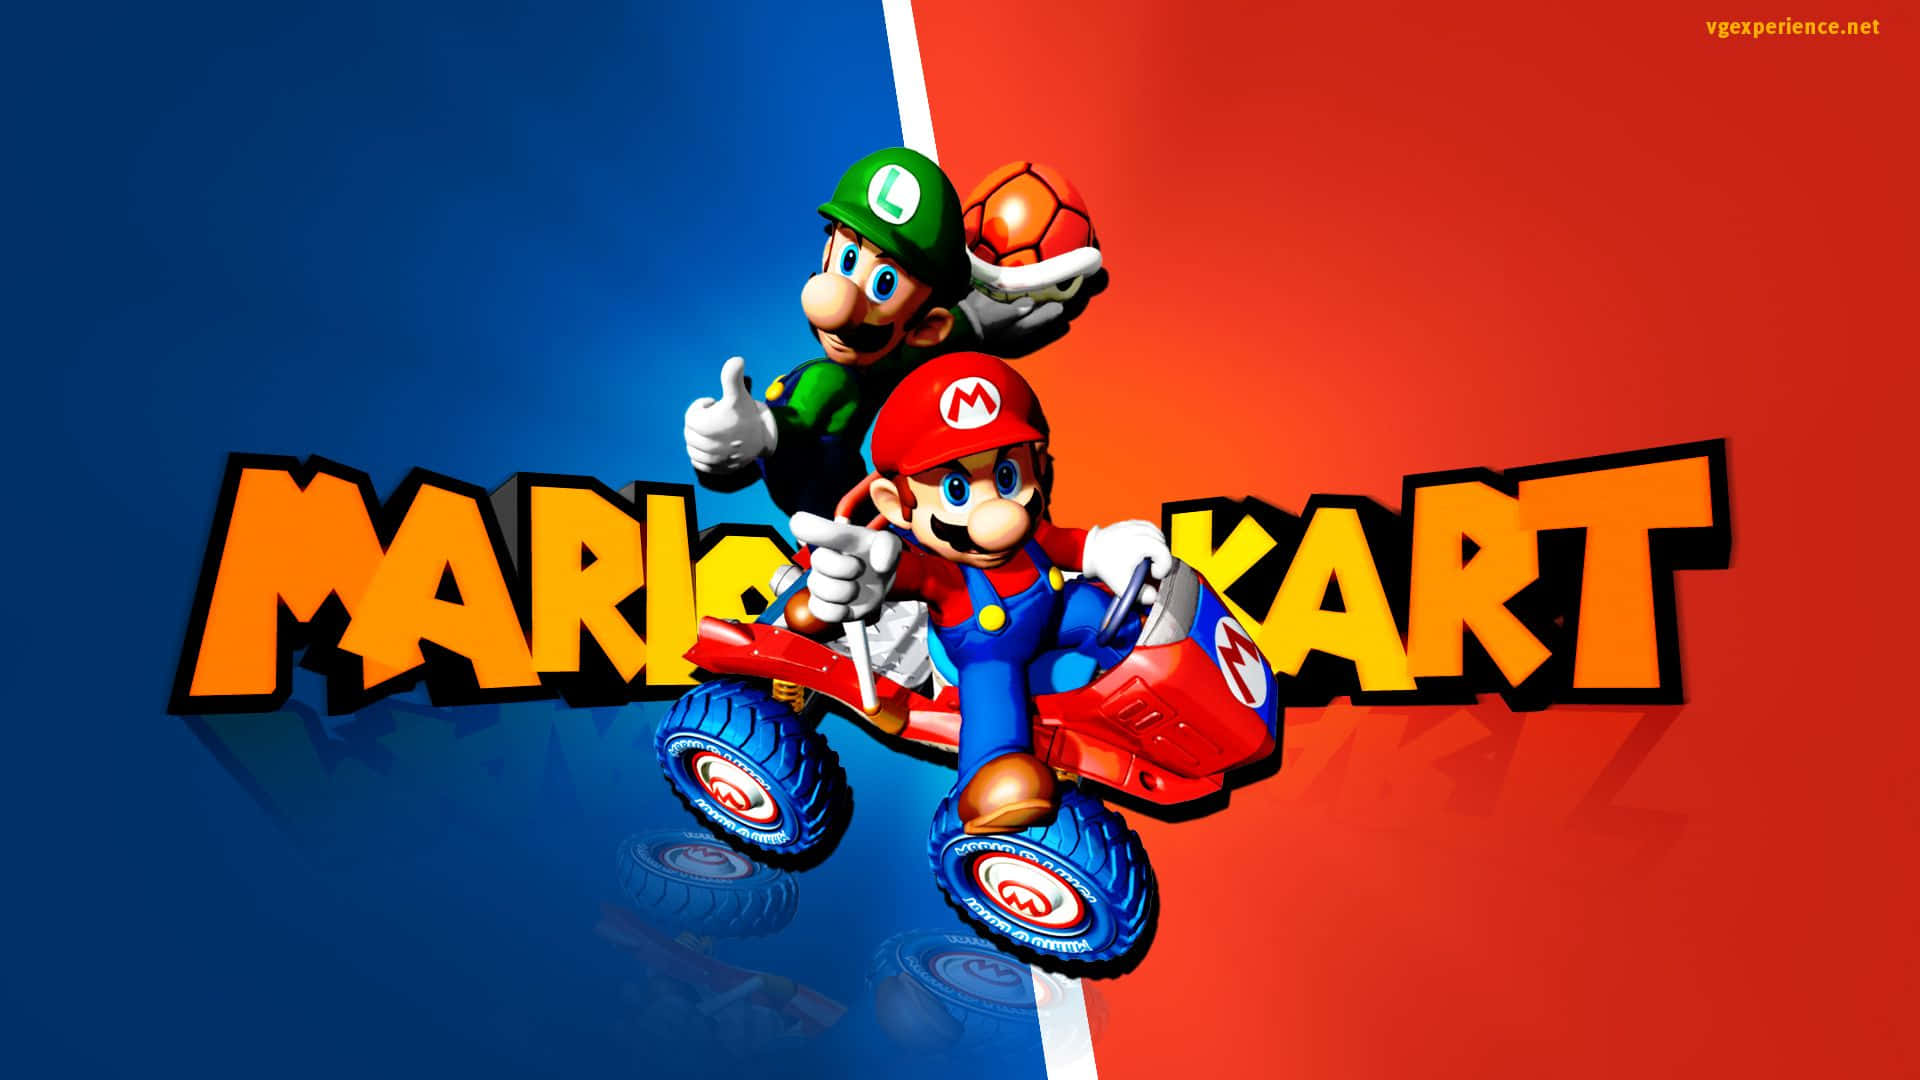 Join the GoKart Racing Fun with Mario Kart!